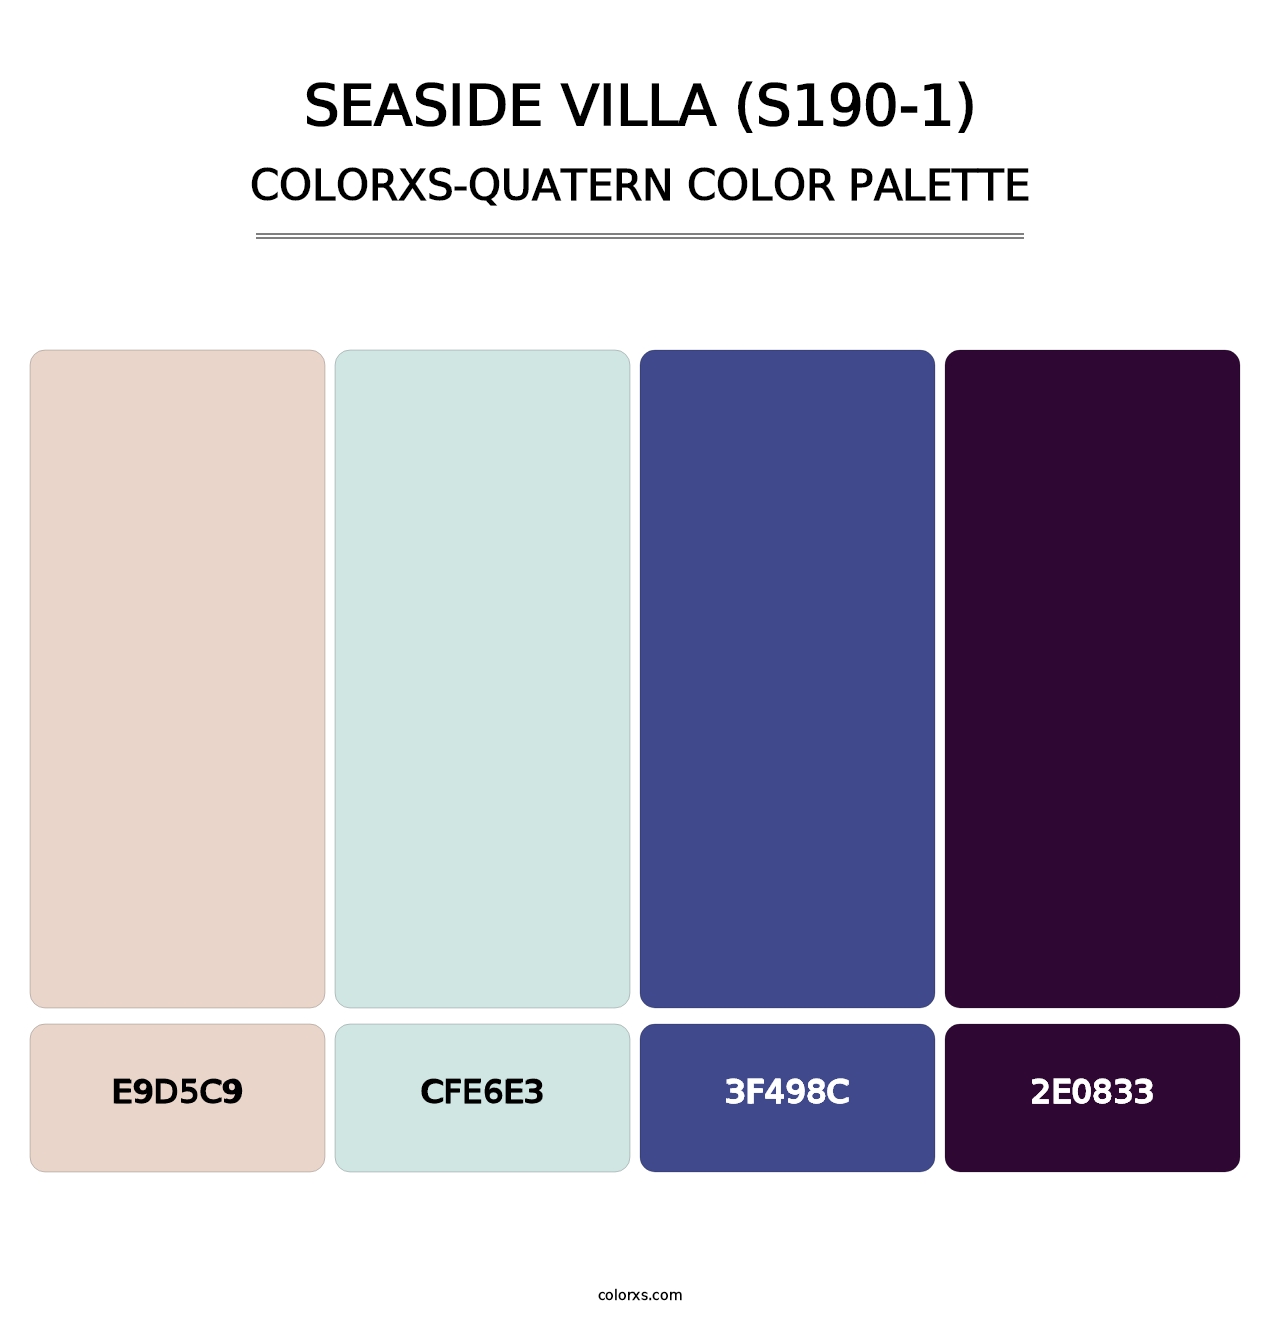 Seaside Villa (S190-1) - Colorxs Quatern Palette